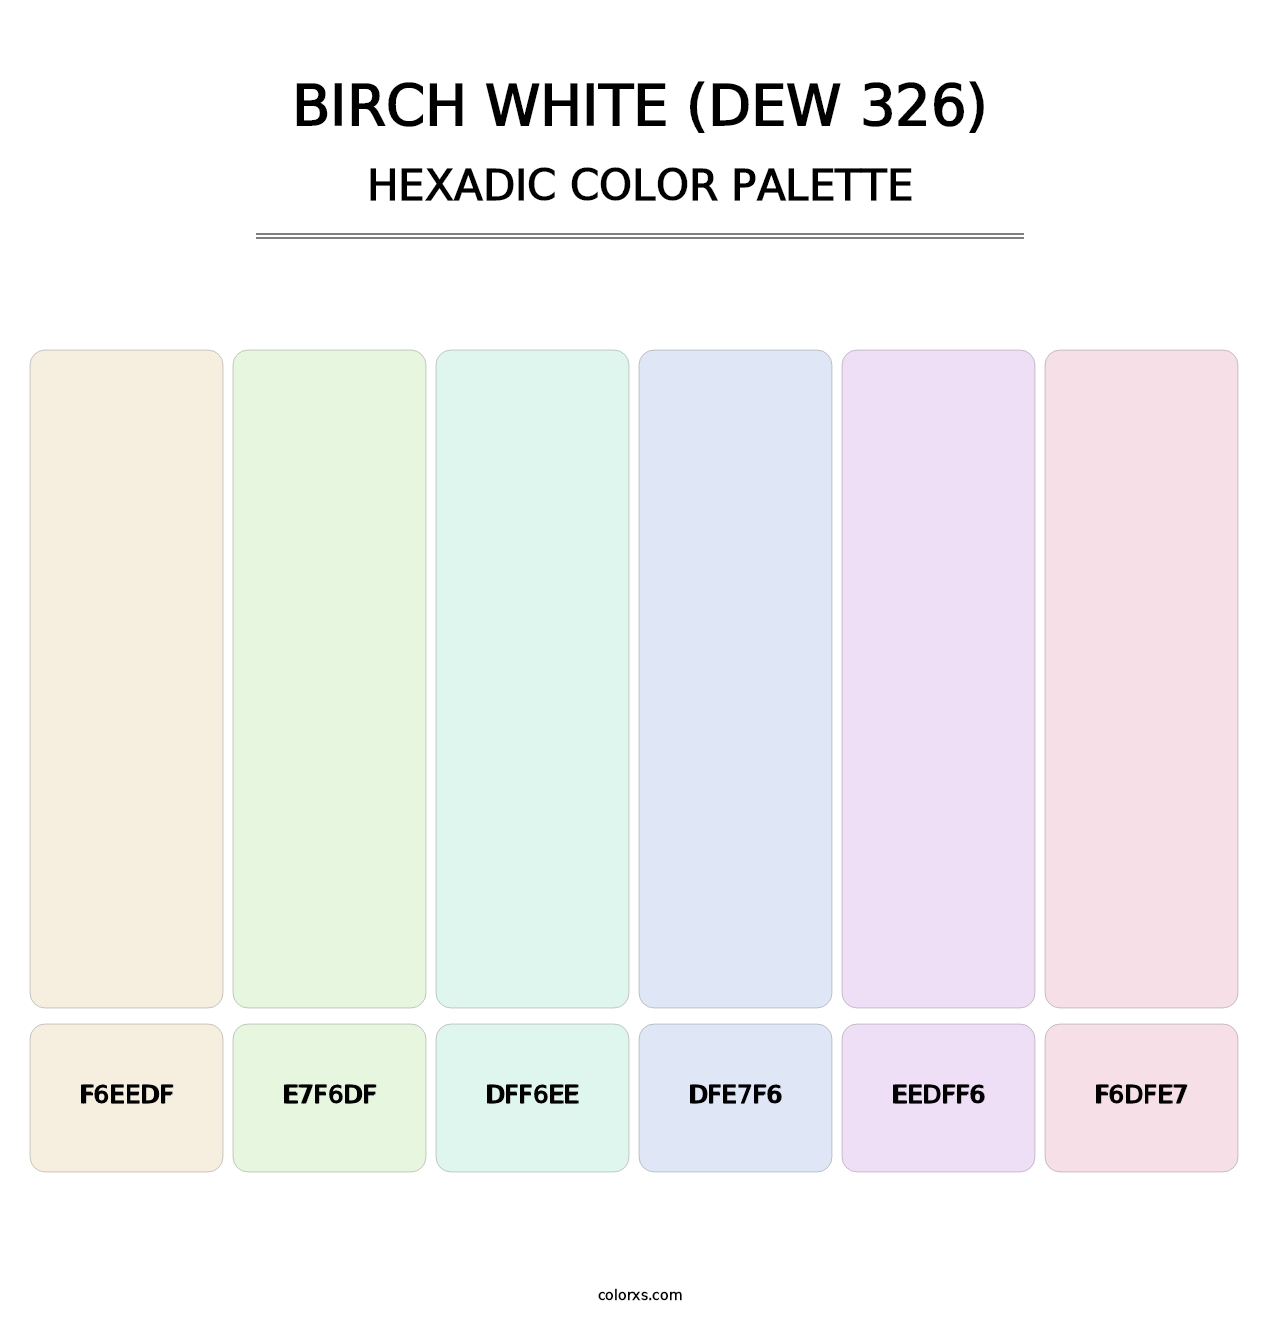 Birch White (DEW 326) - Hexadic Color Palette